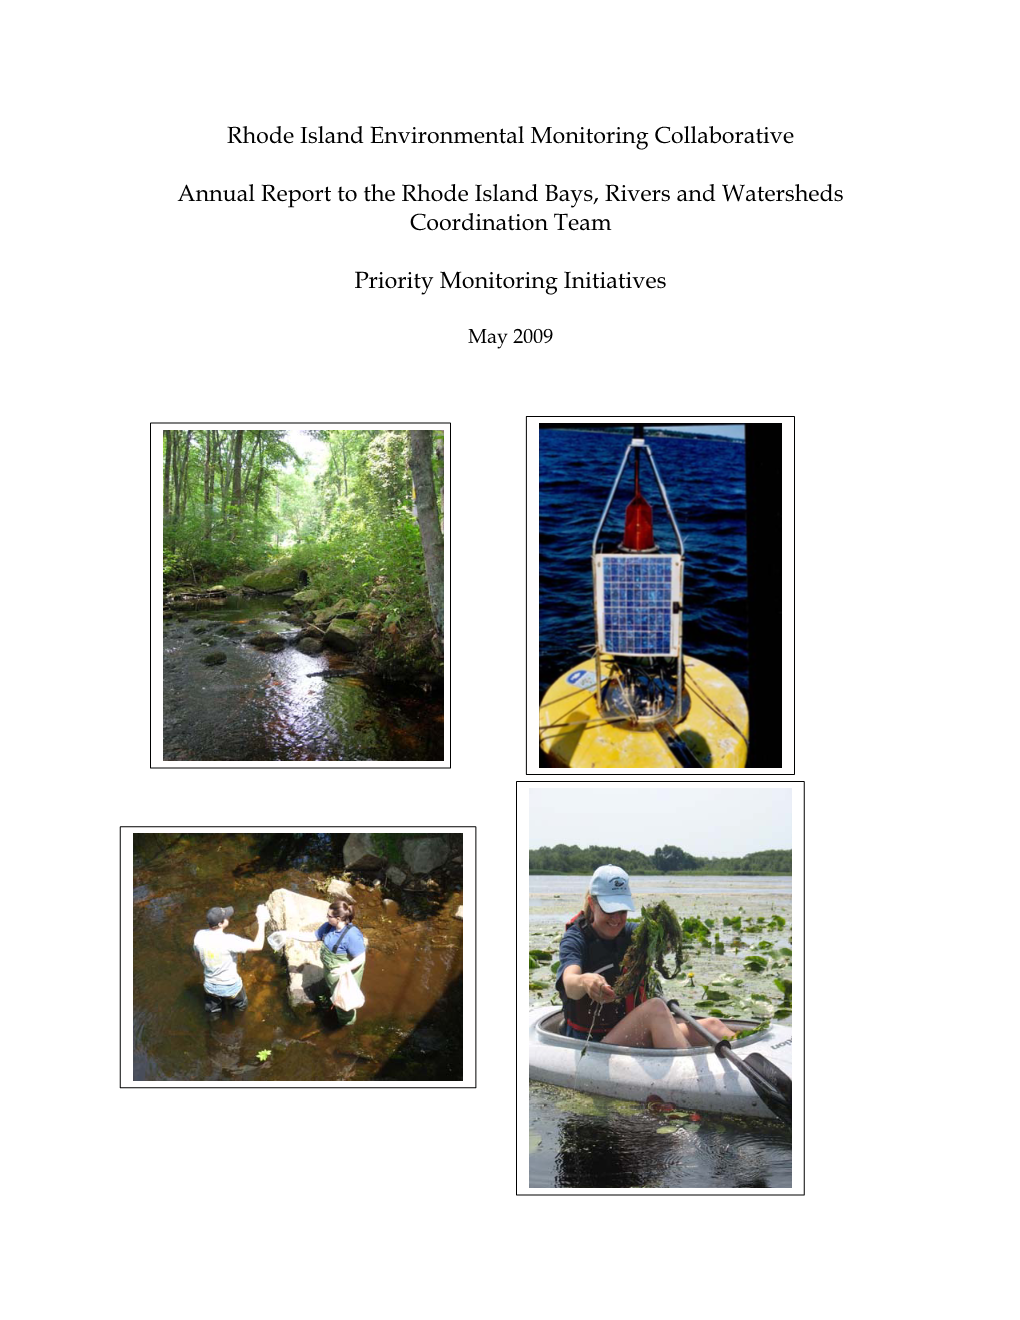 Rhode Island Environmental Monitoring Collaborative Annual